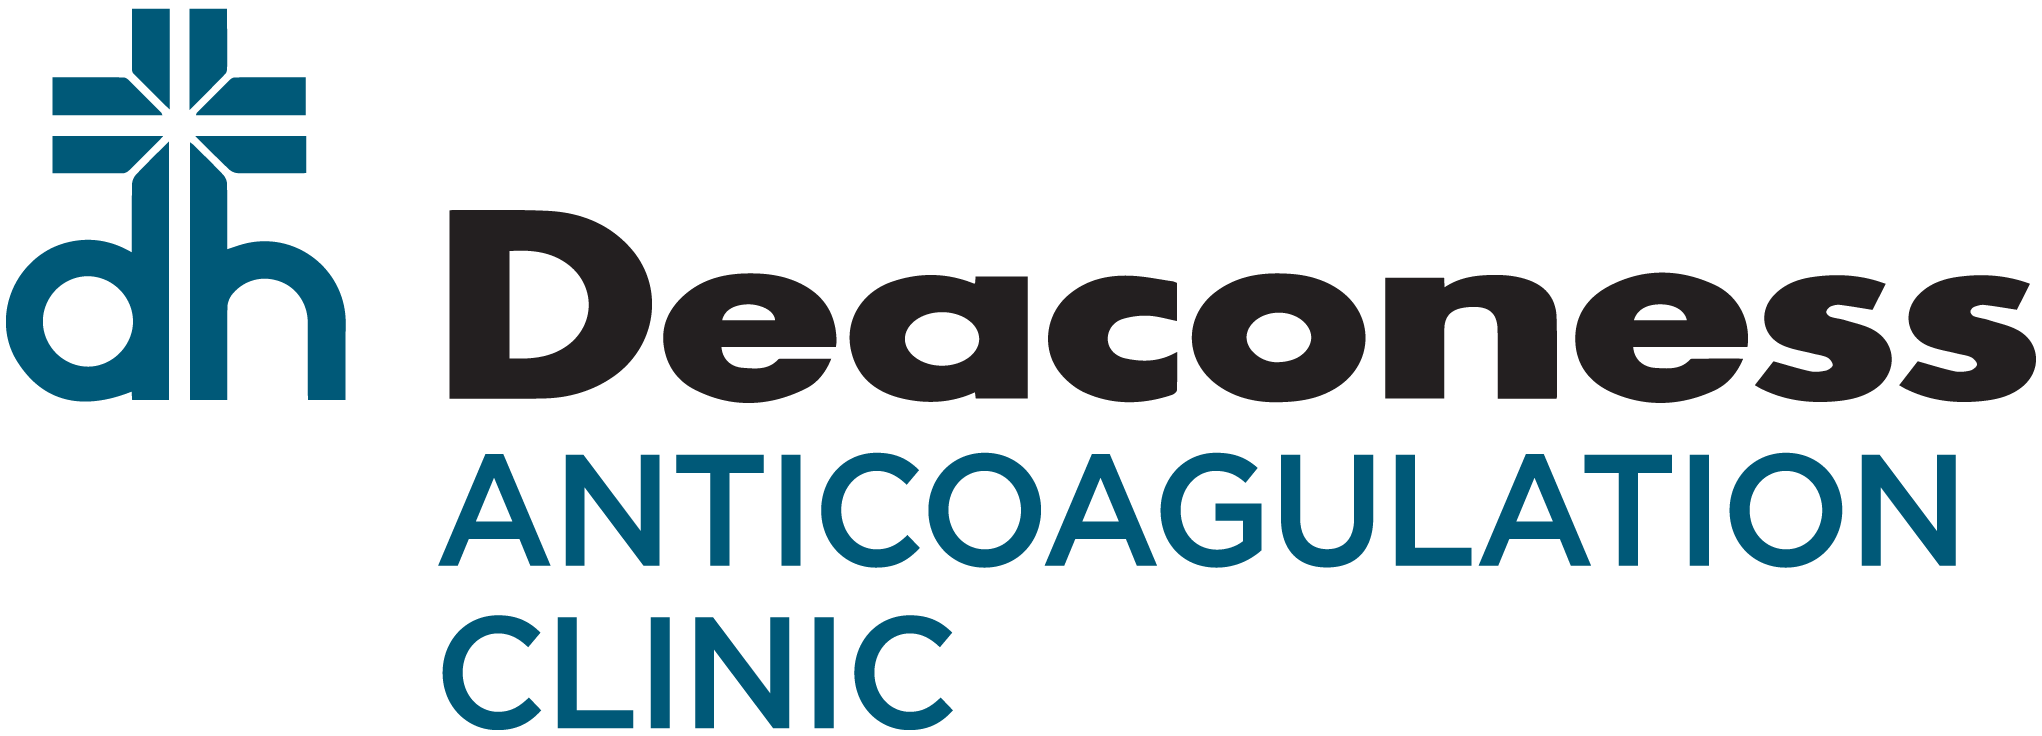 Deaconess Anticoagulation Clinic